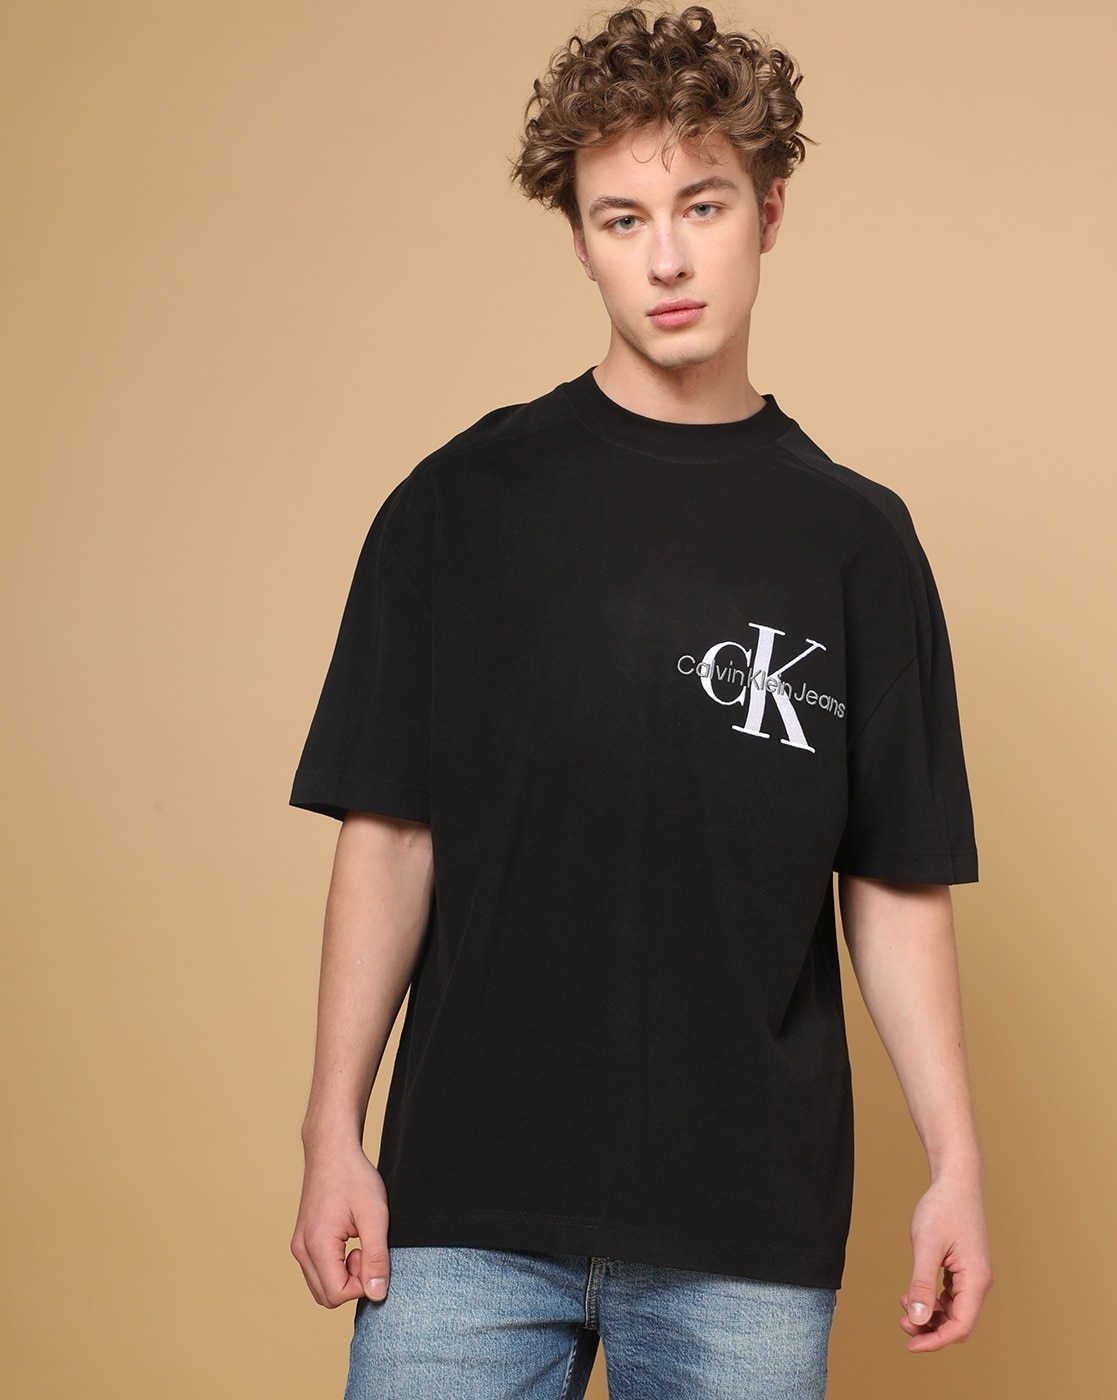 Buy Black Klein Online by for Jeans Calvin Tshirts Men